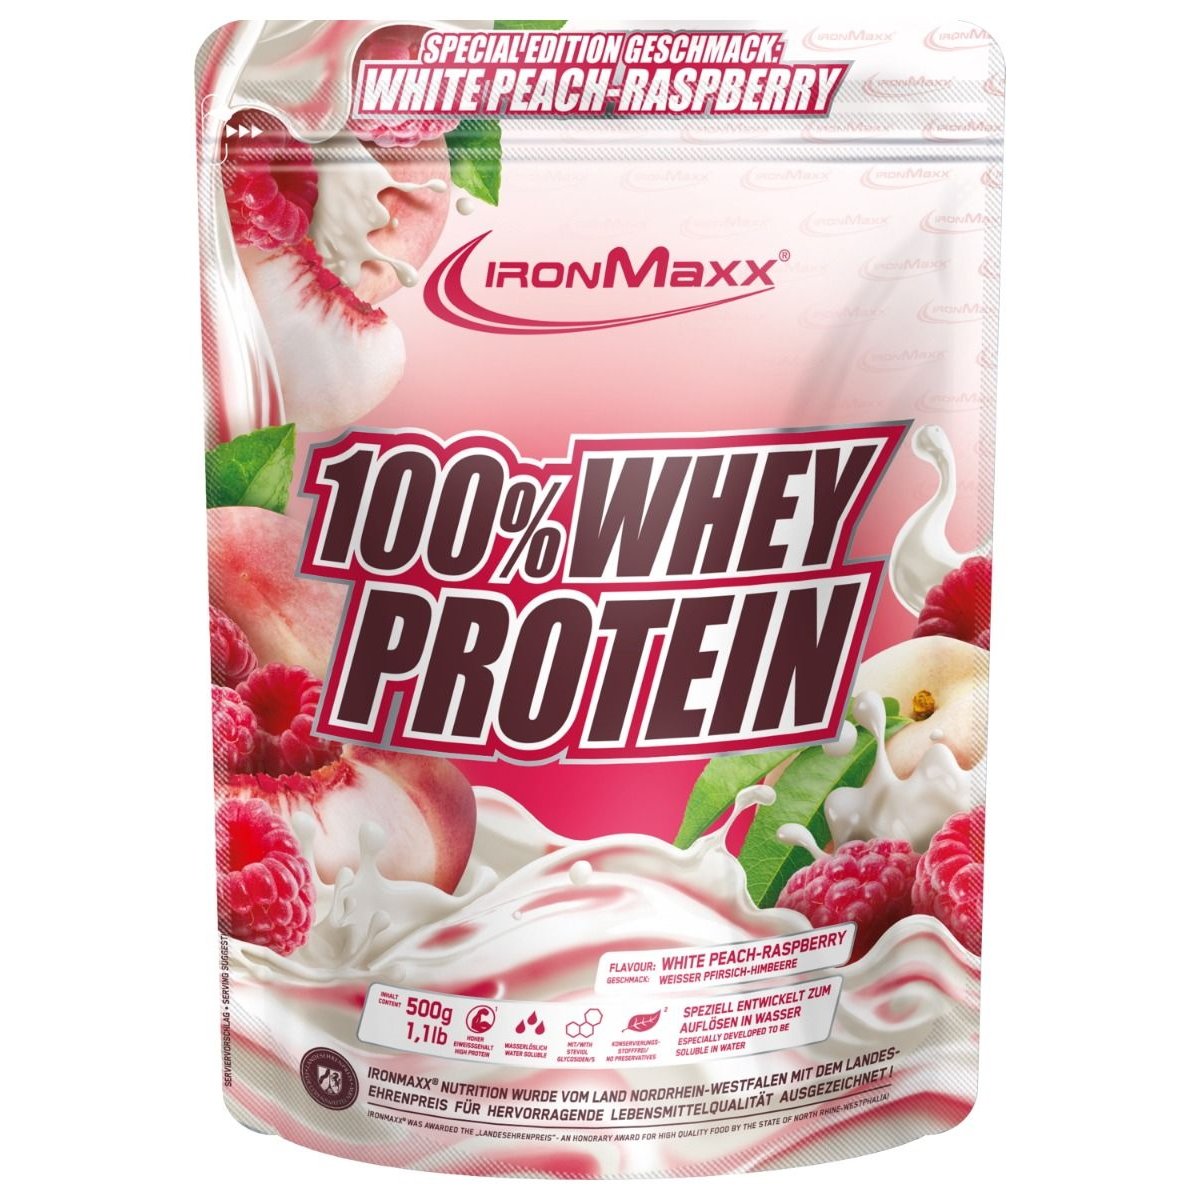 IronMaxx Протеин Ironmaxx 100% Whey Protein, 500 грамм Белый персик-малина, , 500 грамм